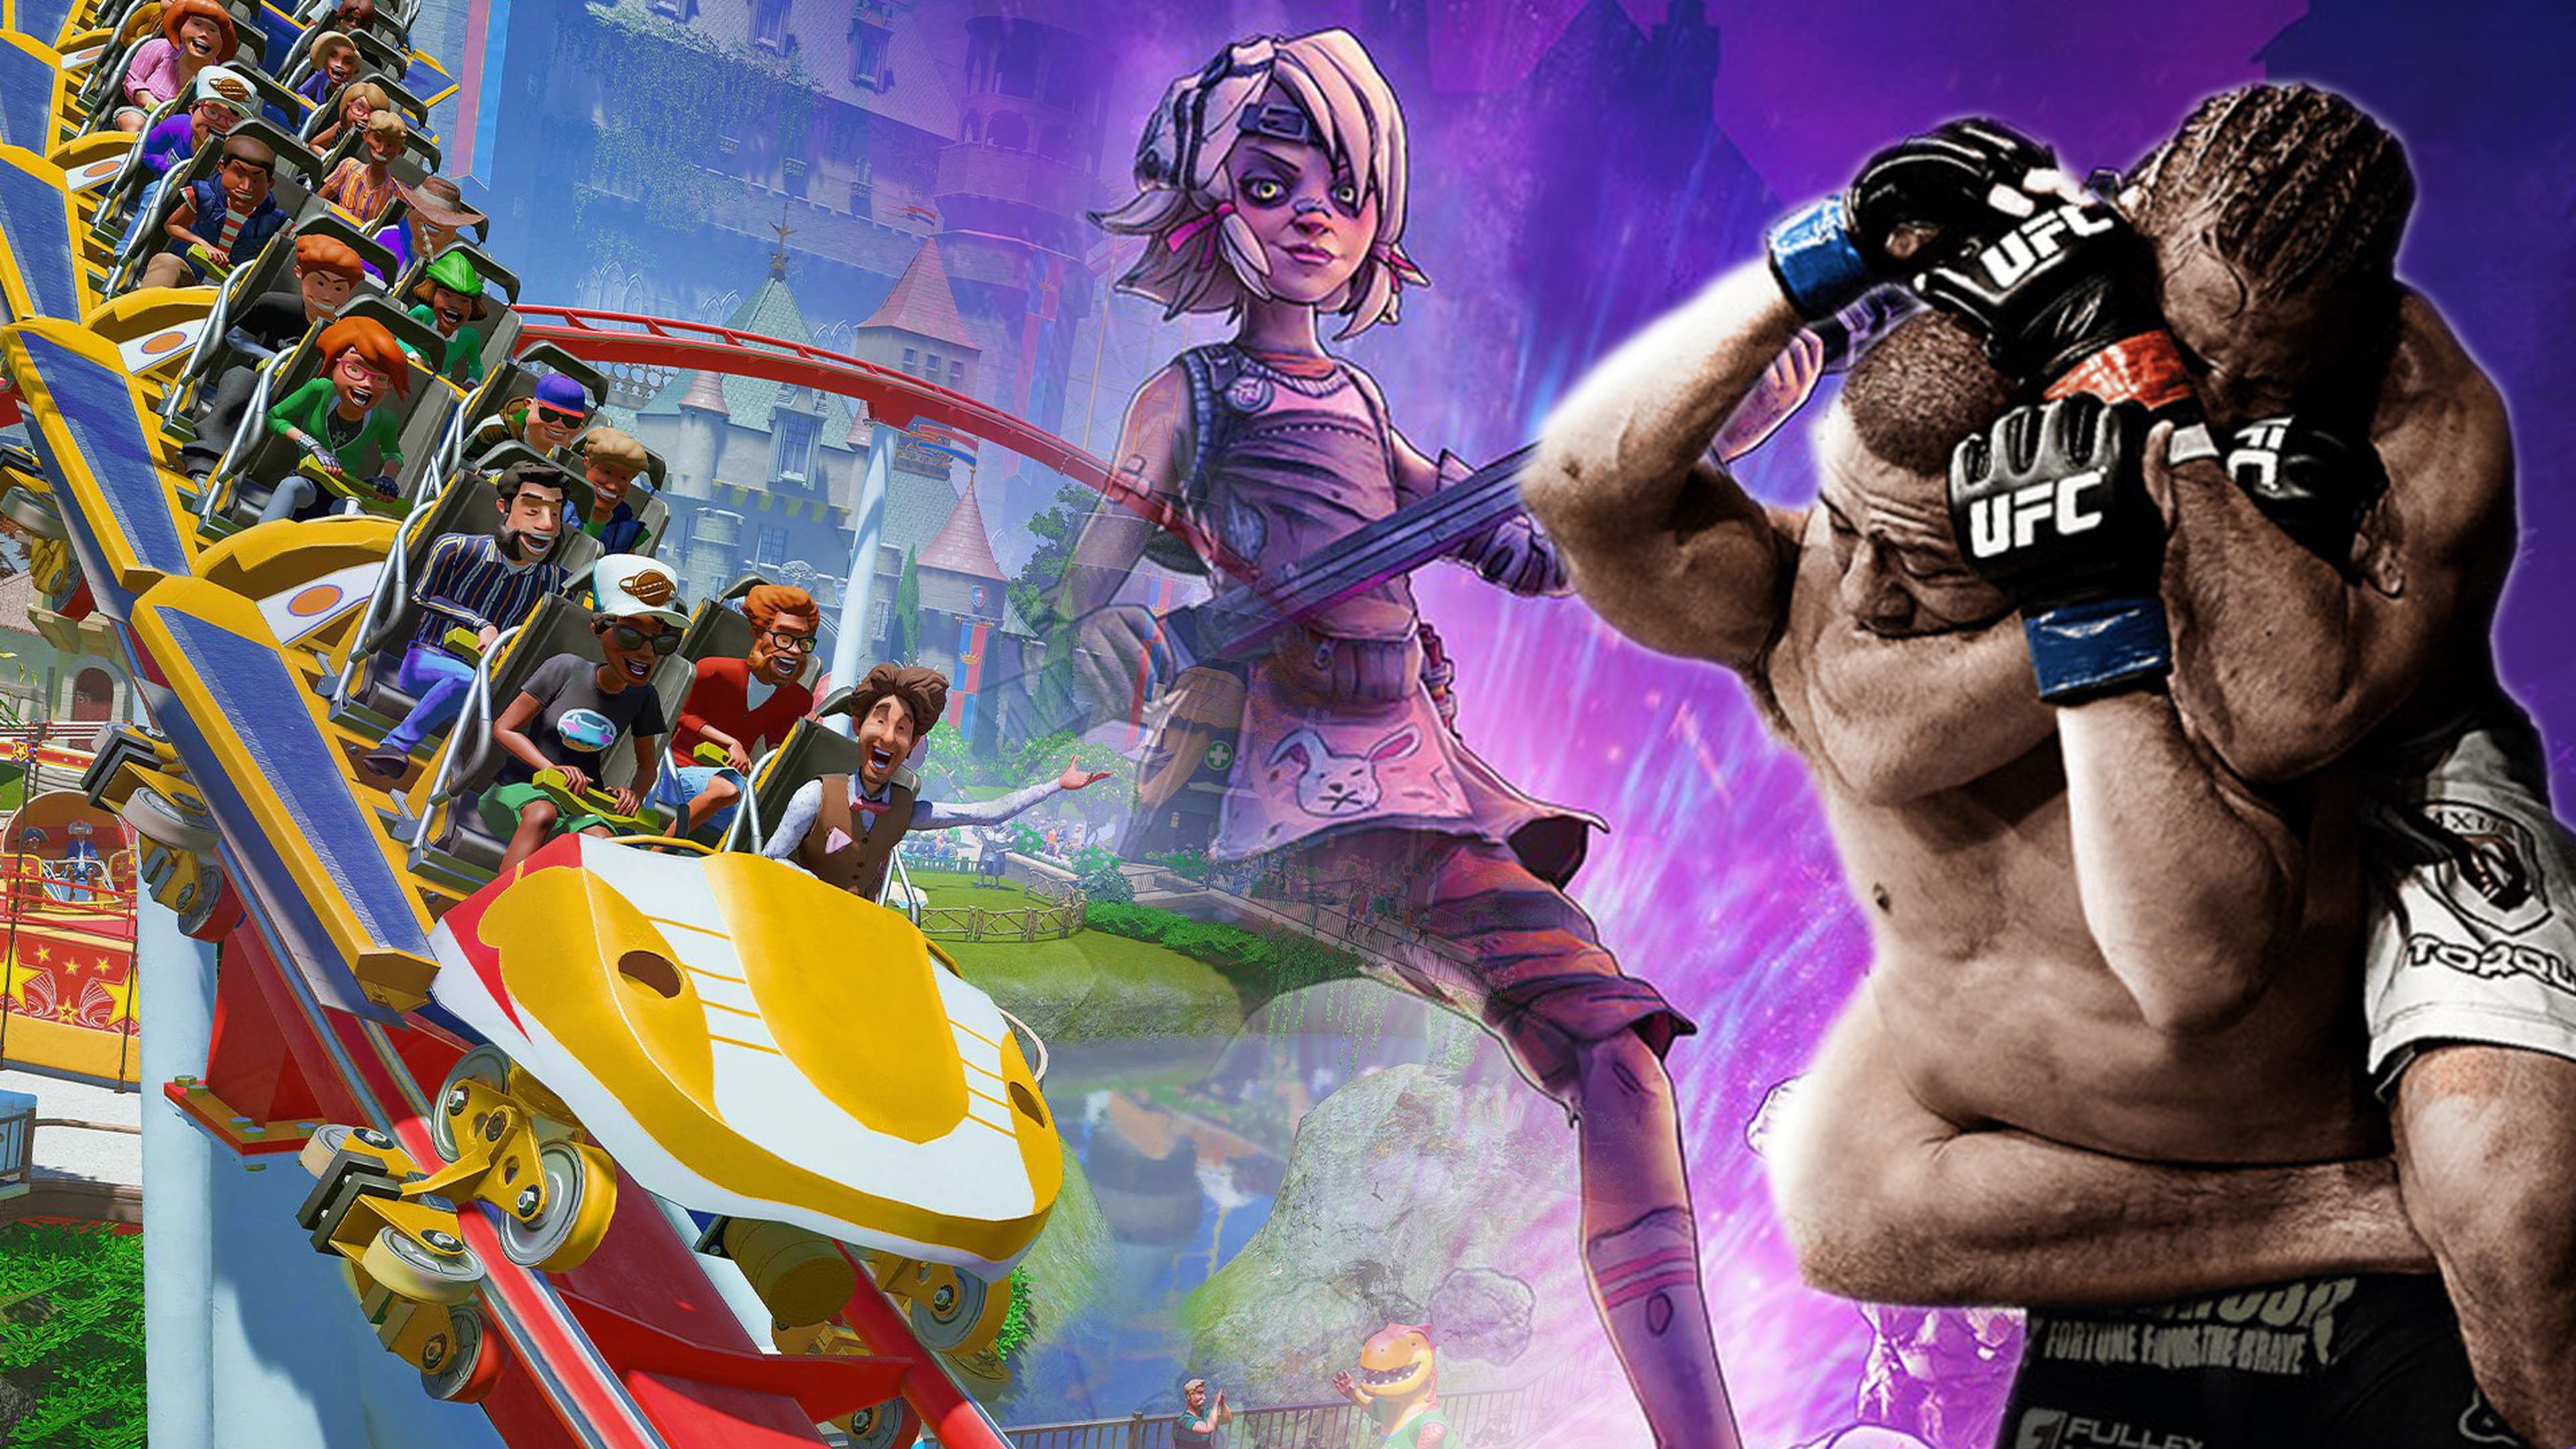 Jogos PlayStation Plus para fevereiro: EA Sports UFC 4, Tiny Tina's Assault  on Dragon Keep: A Wonderlands One-shot Adventure e Planet Coaster: Console  Edition – PlayStation.Blog BR